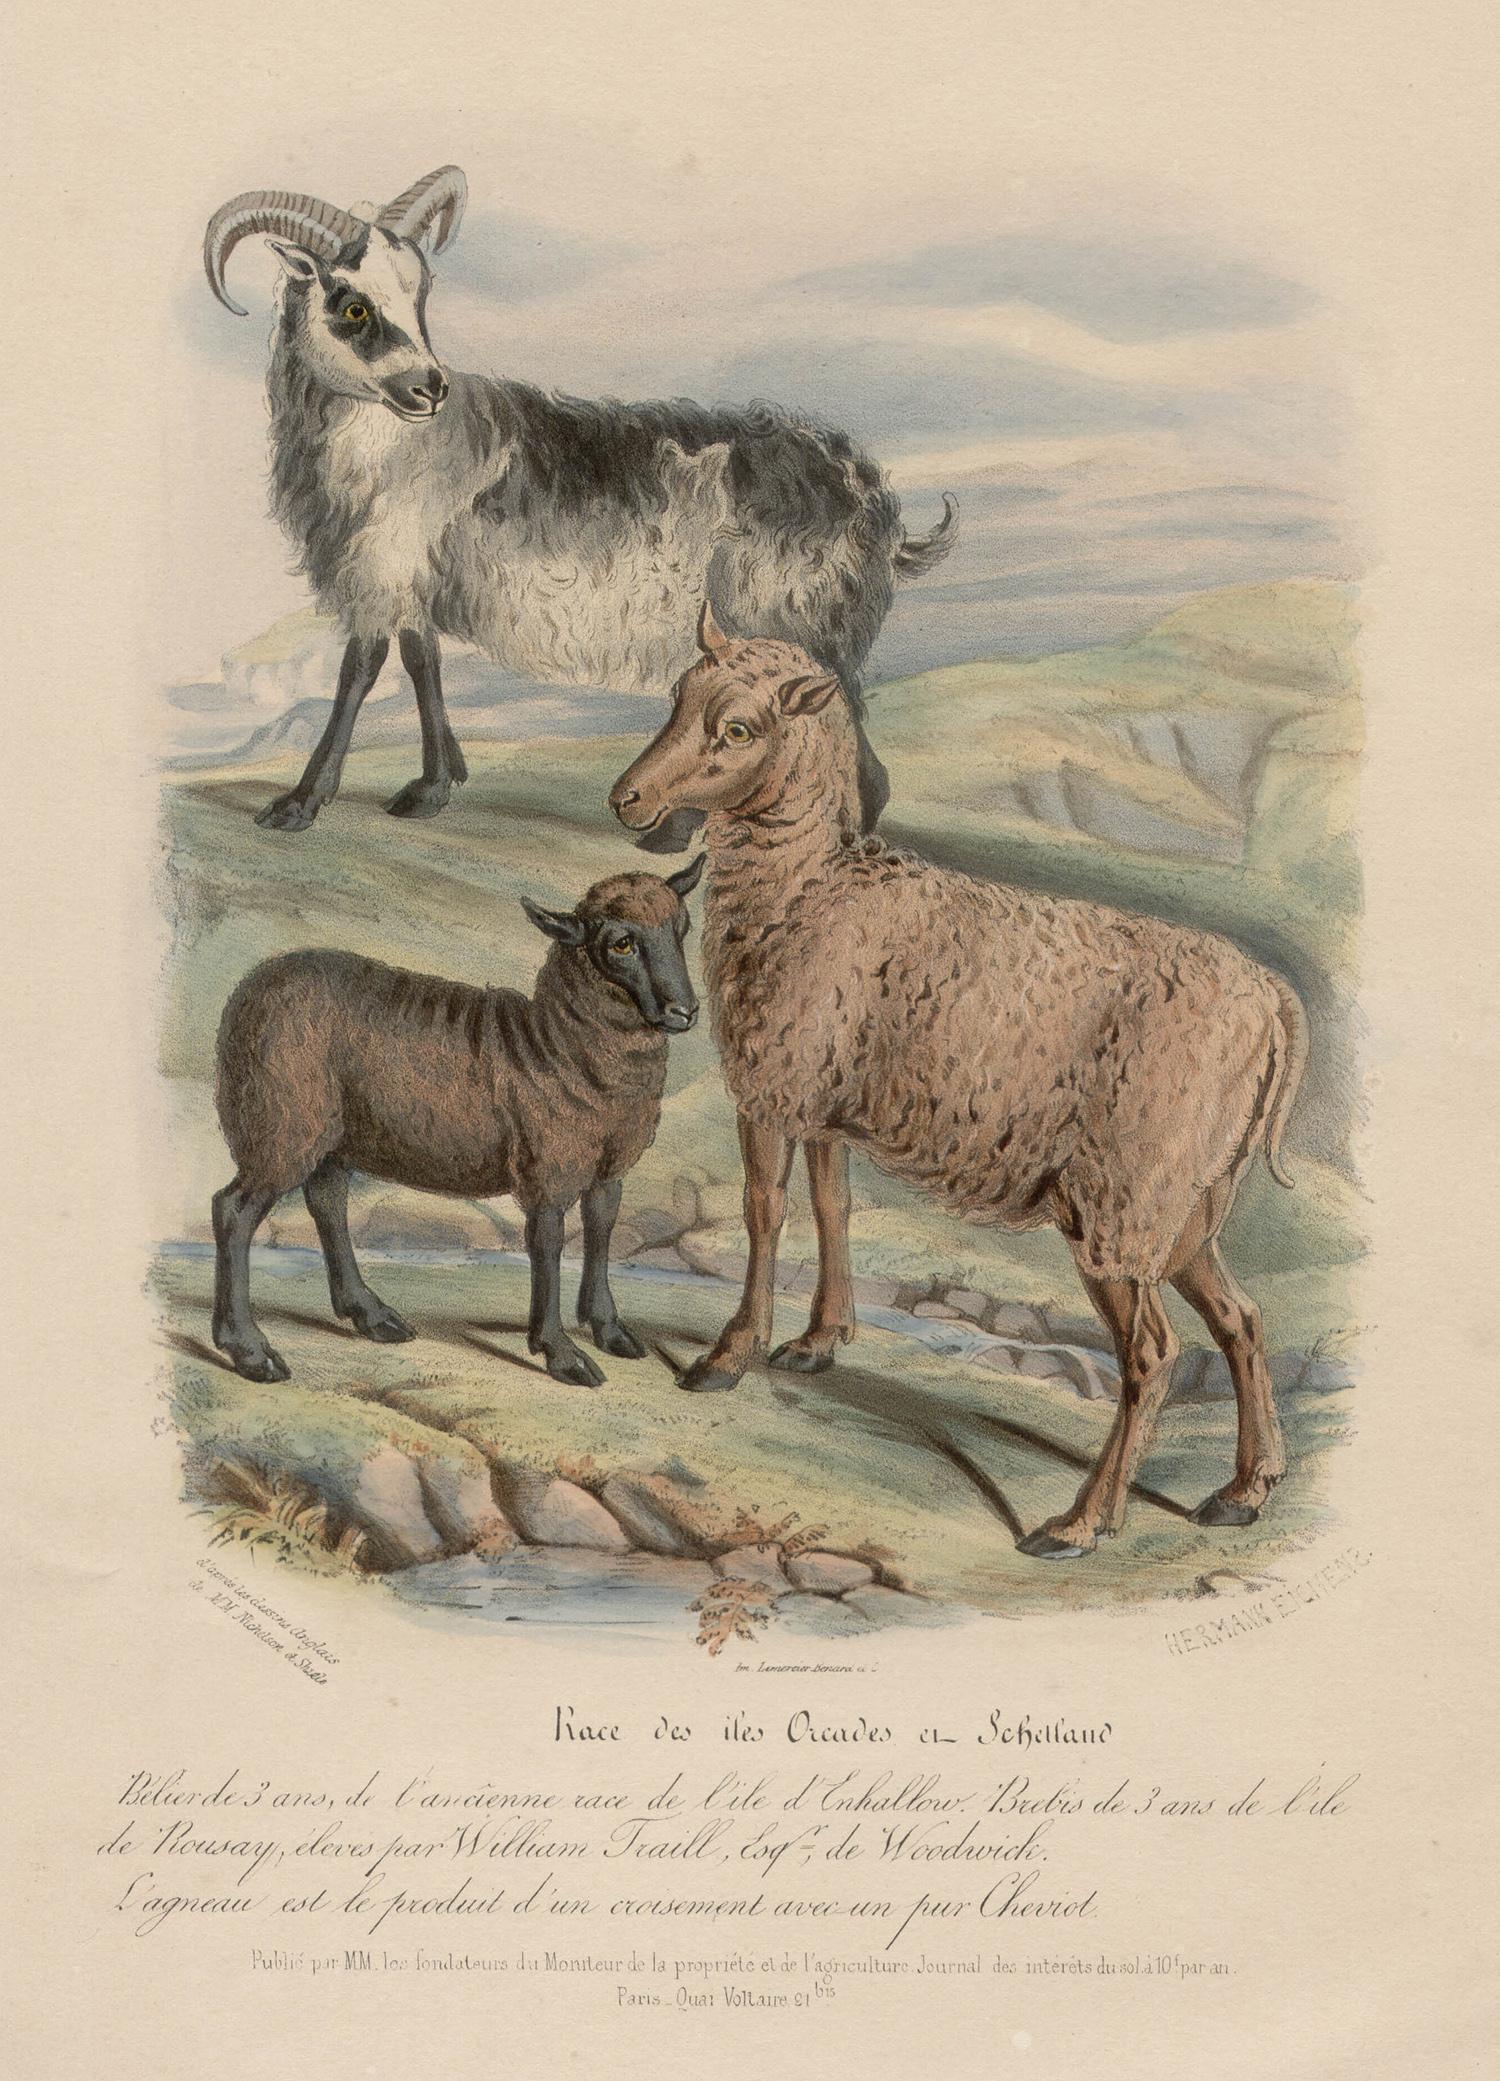 After William Shiels Animal Print - Shetland and Orkney Island Sheep, Scotland, animal lithograph print